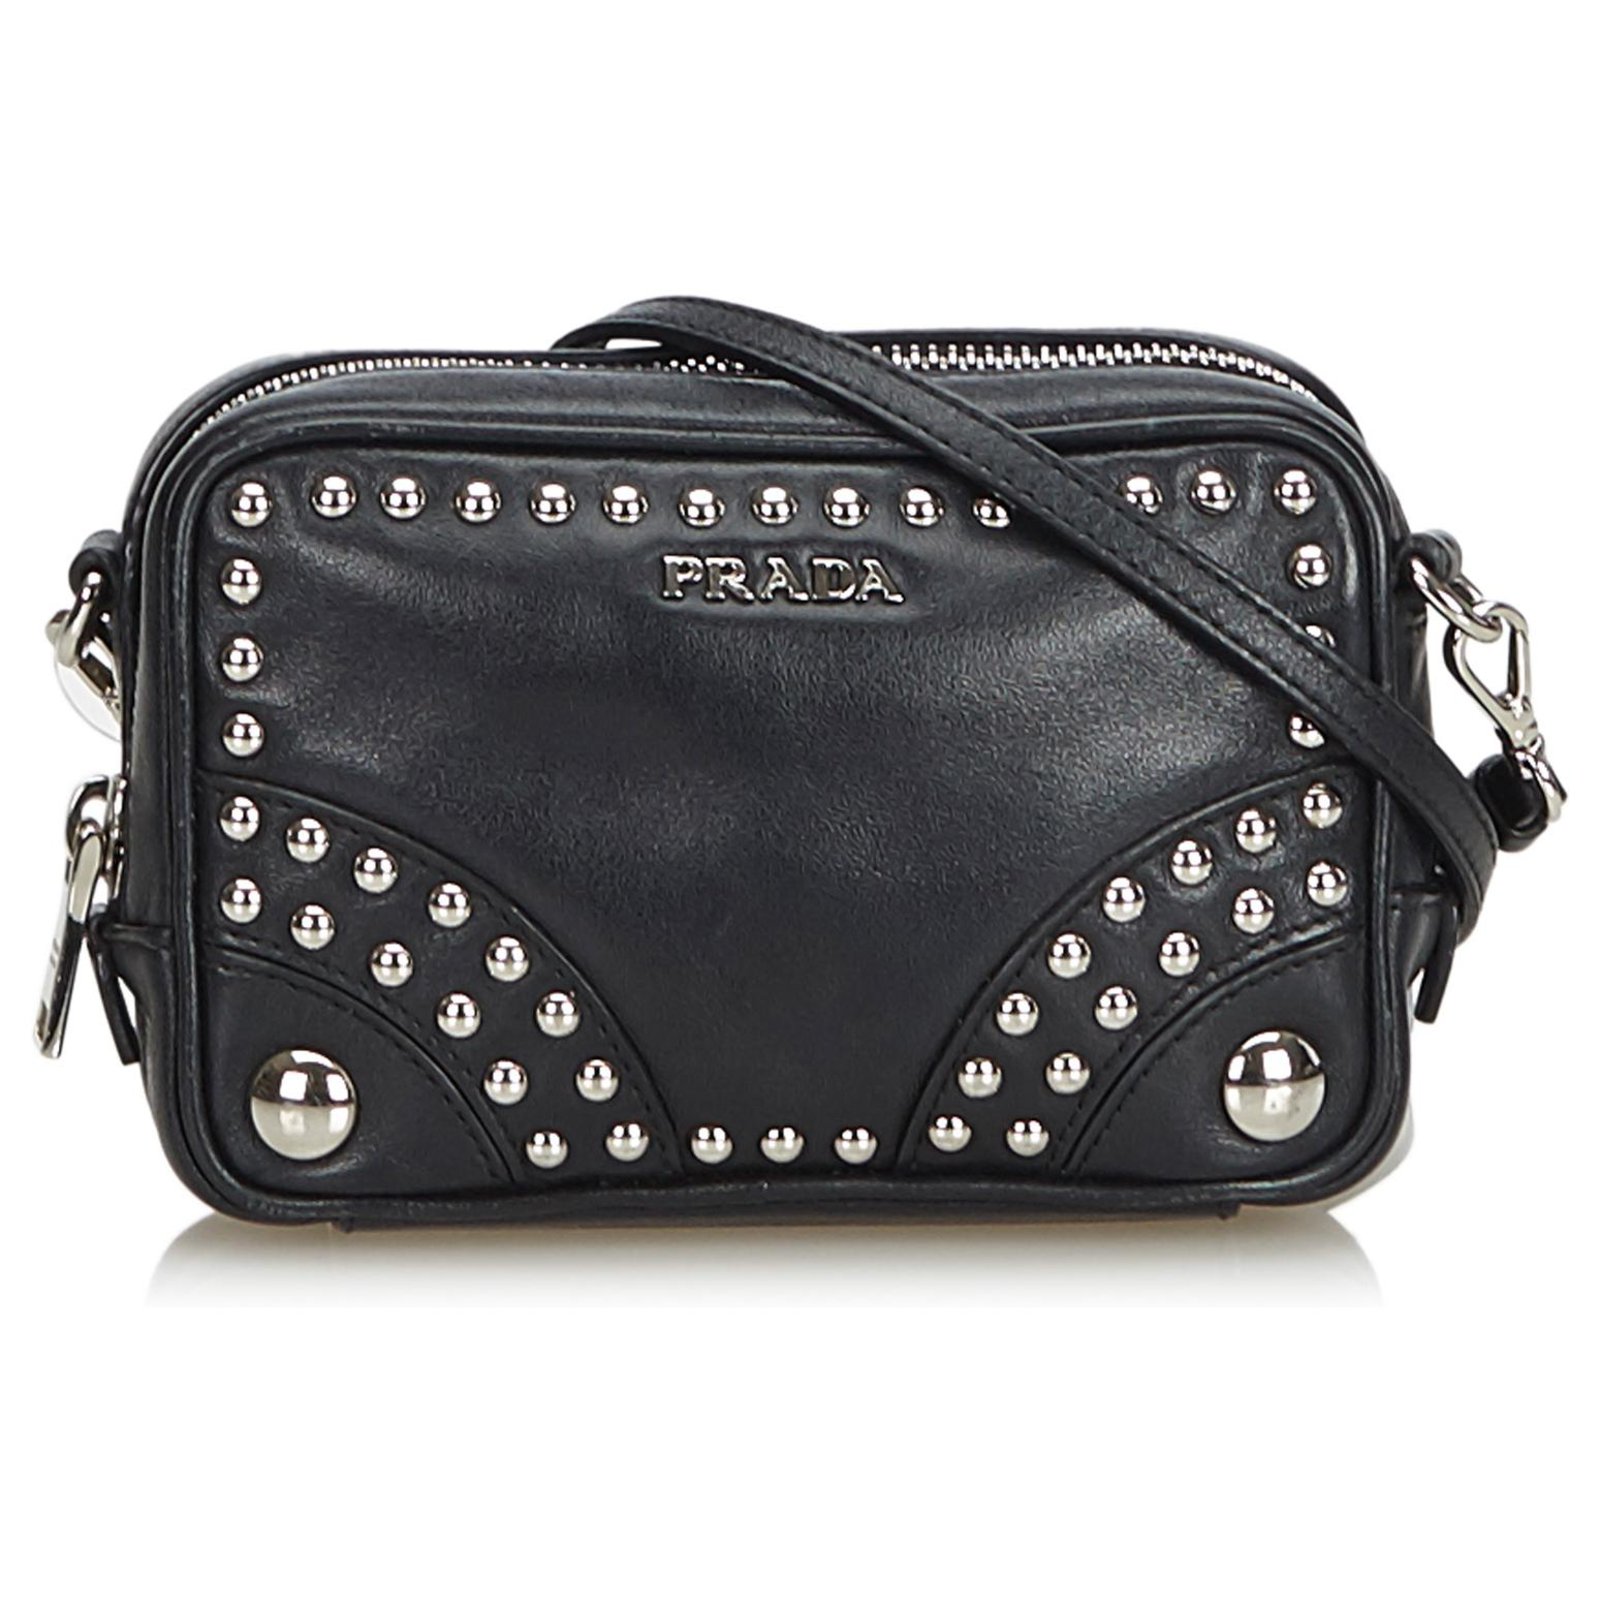 prada-black-studded-leather-camera-crossbody-bag-handbags.jpg